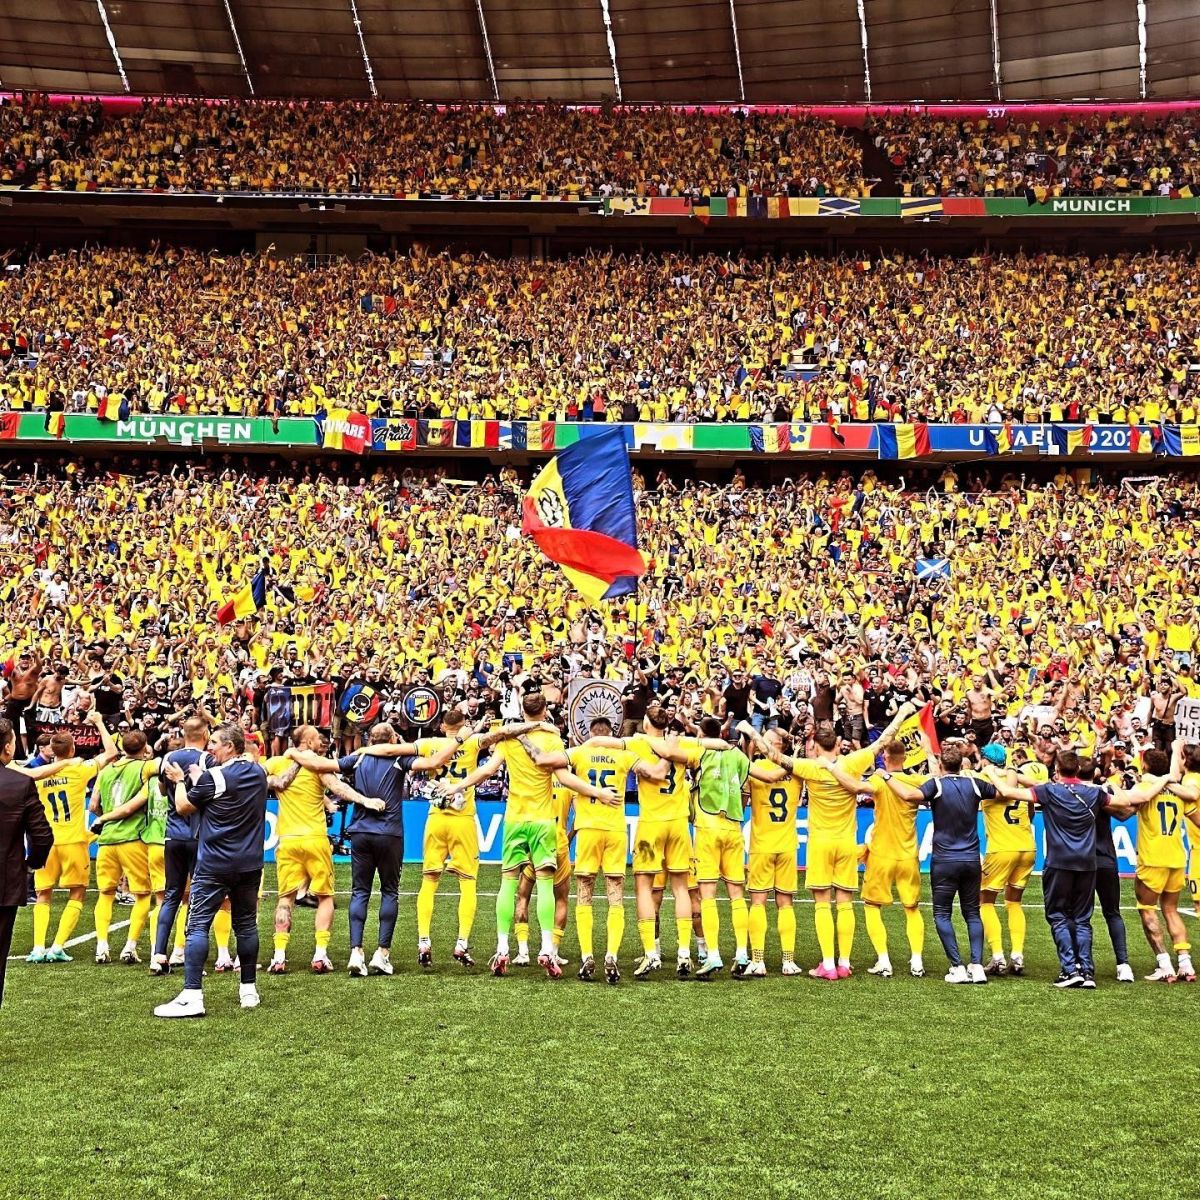 România azvimsi cu 3-0 Ucraina (Foto: Facebook / Echipa națională di fotbal ali Românie)